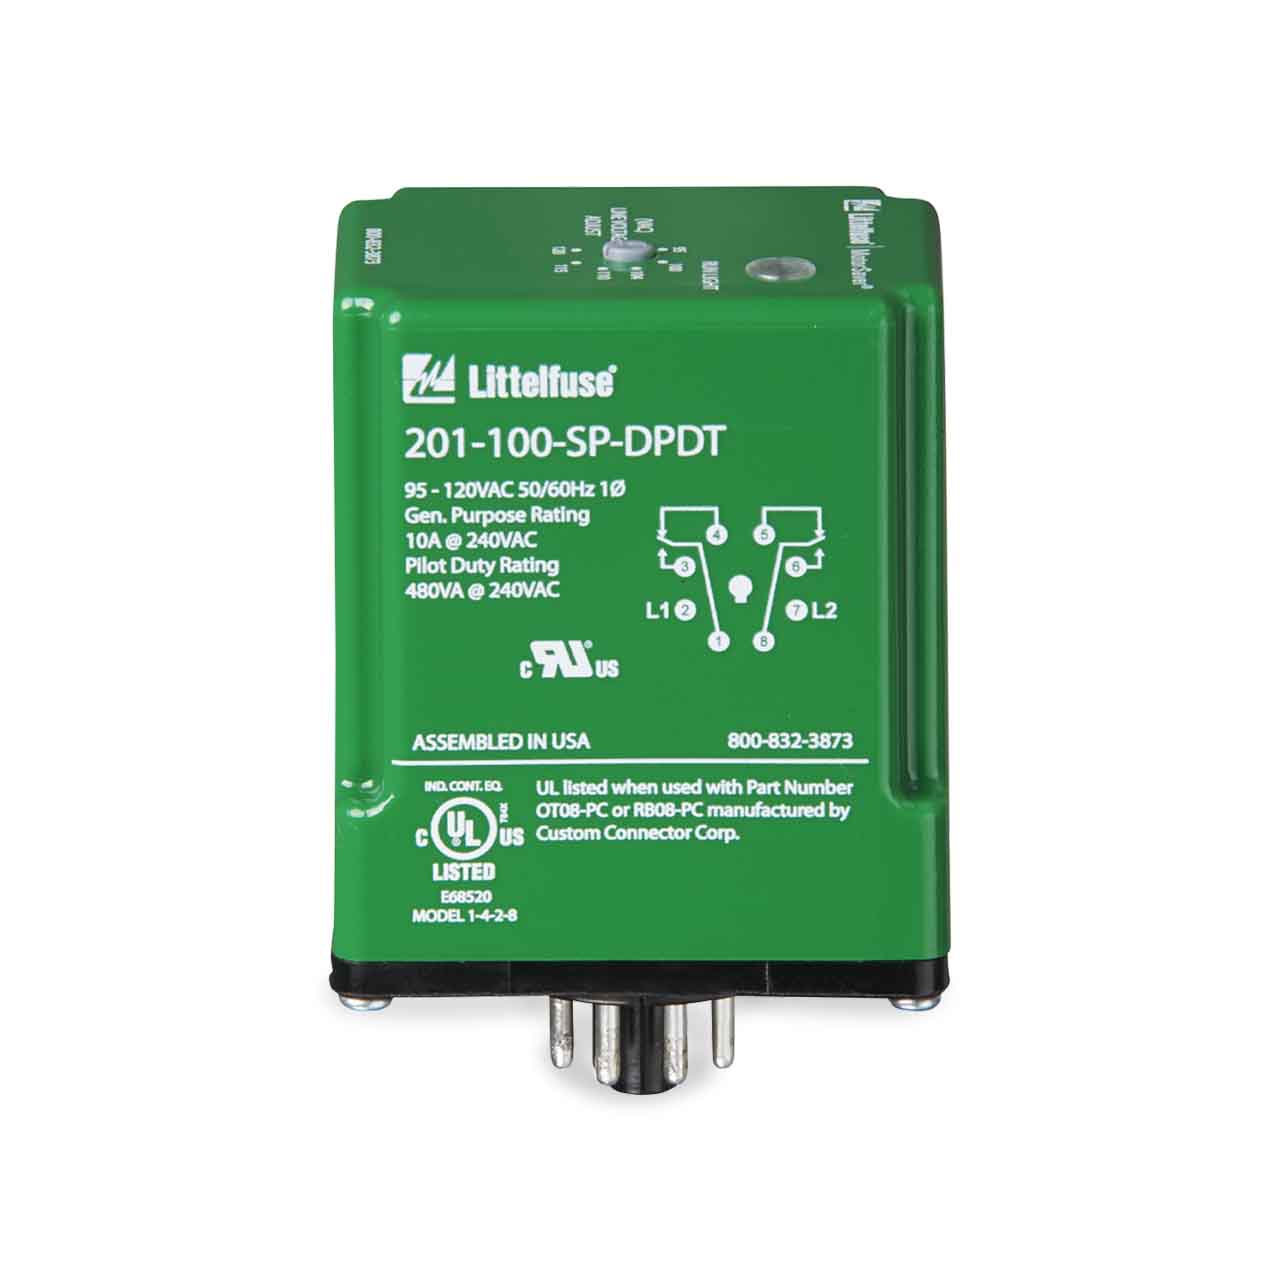 Littelfuse 201-100-SP-DPDT Single-Phase Plug-in Voltage Monitor 95-120V